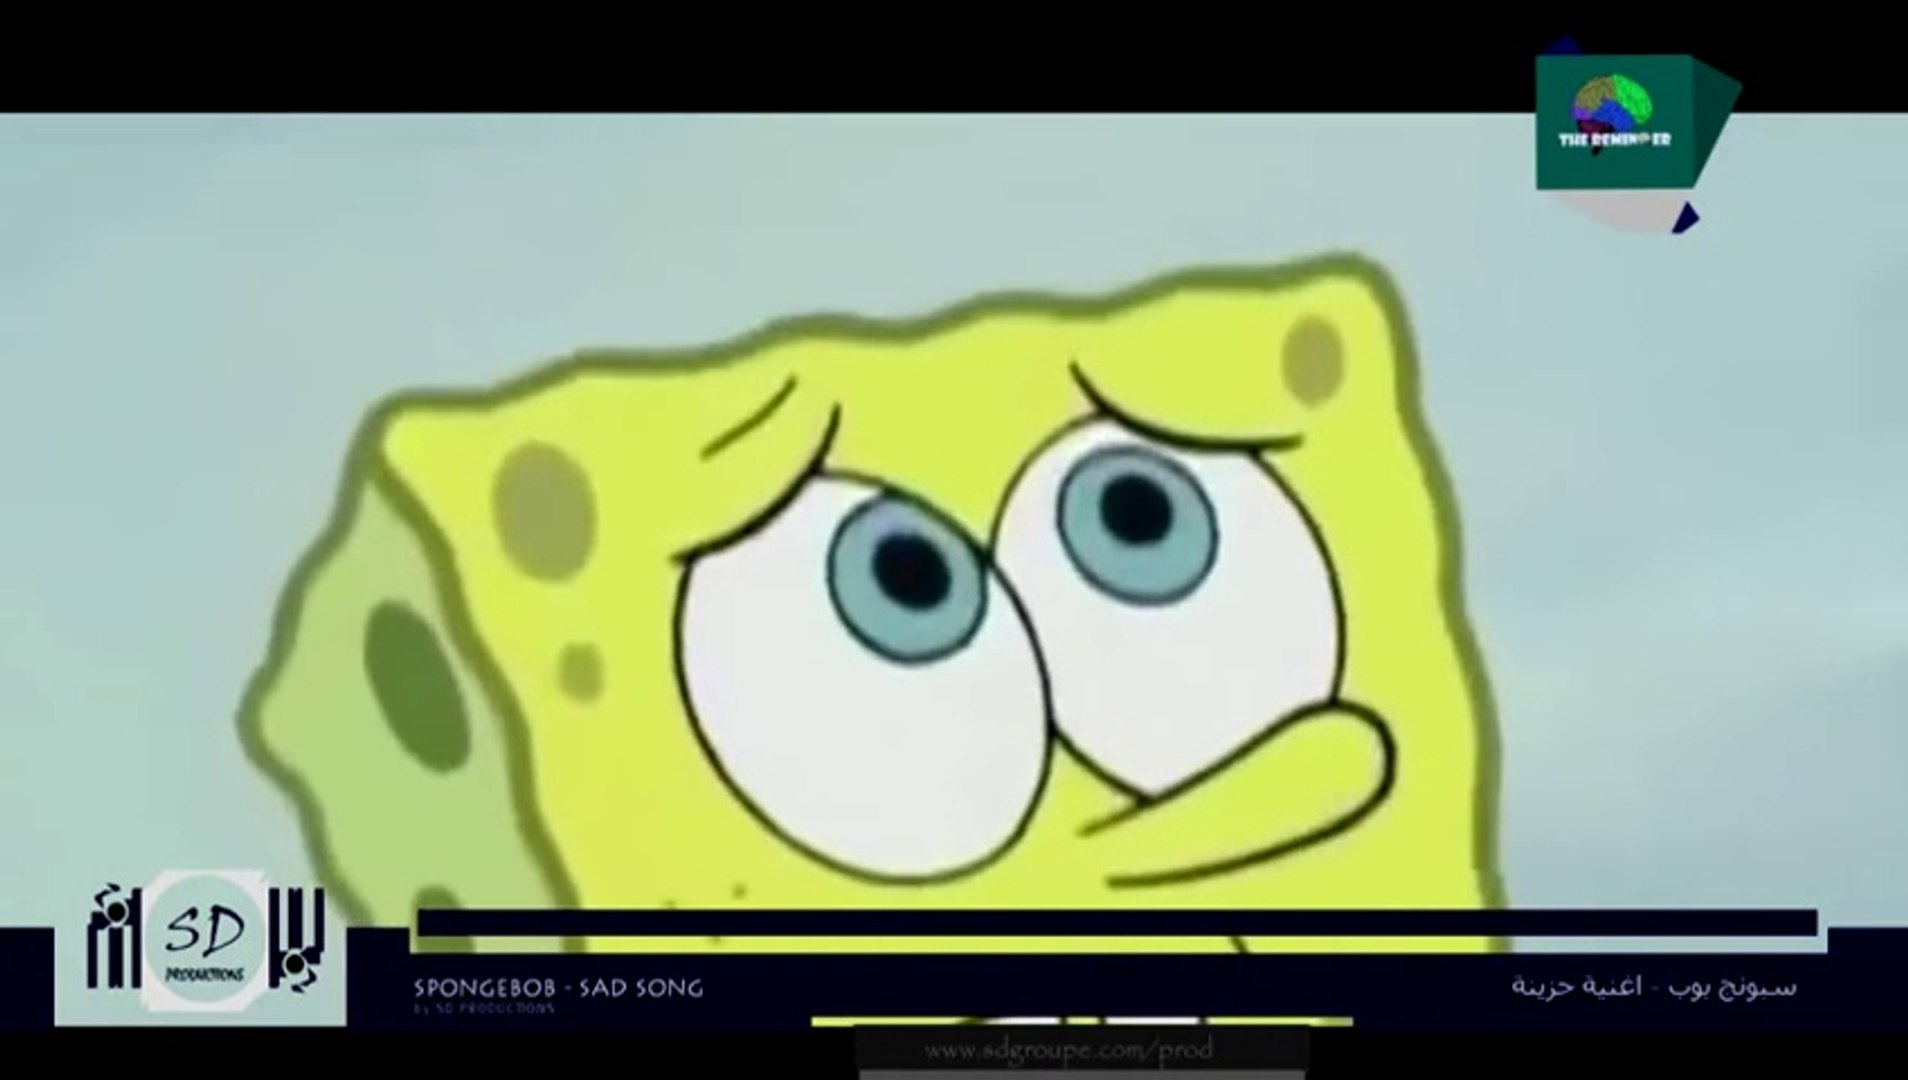 Spongebob - Sad Song - أغنية حزينة - سبونج بوب عد يا سريع - YouTube - فيديو  Dailymotion